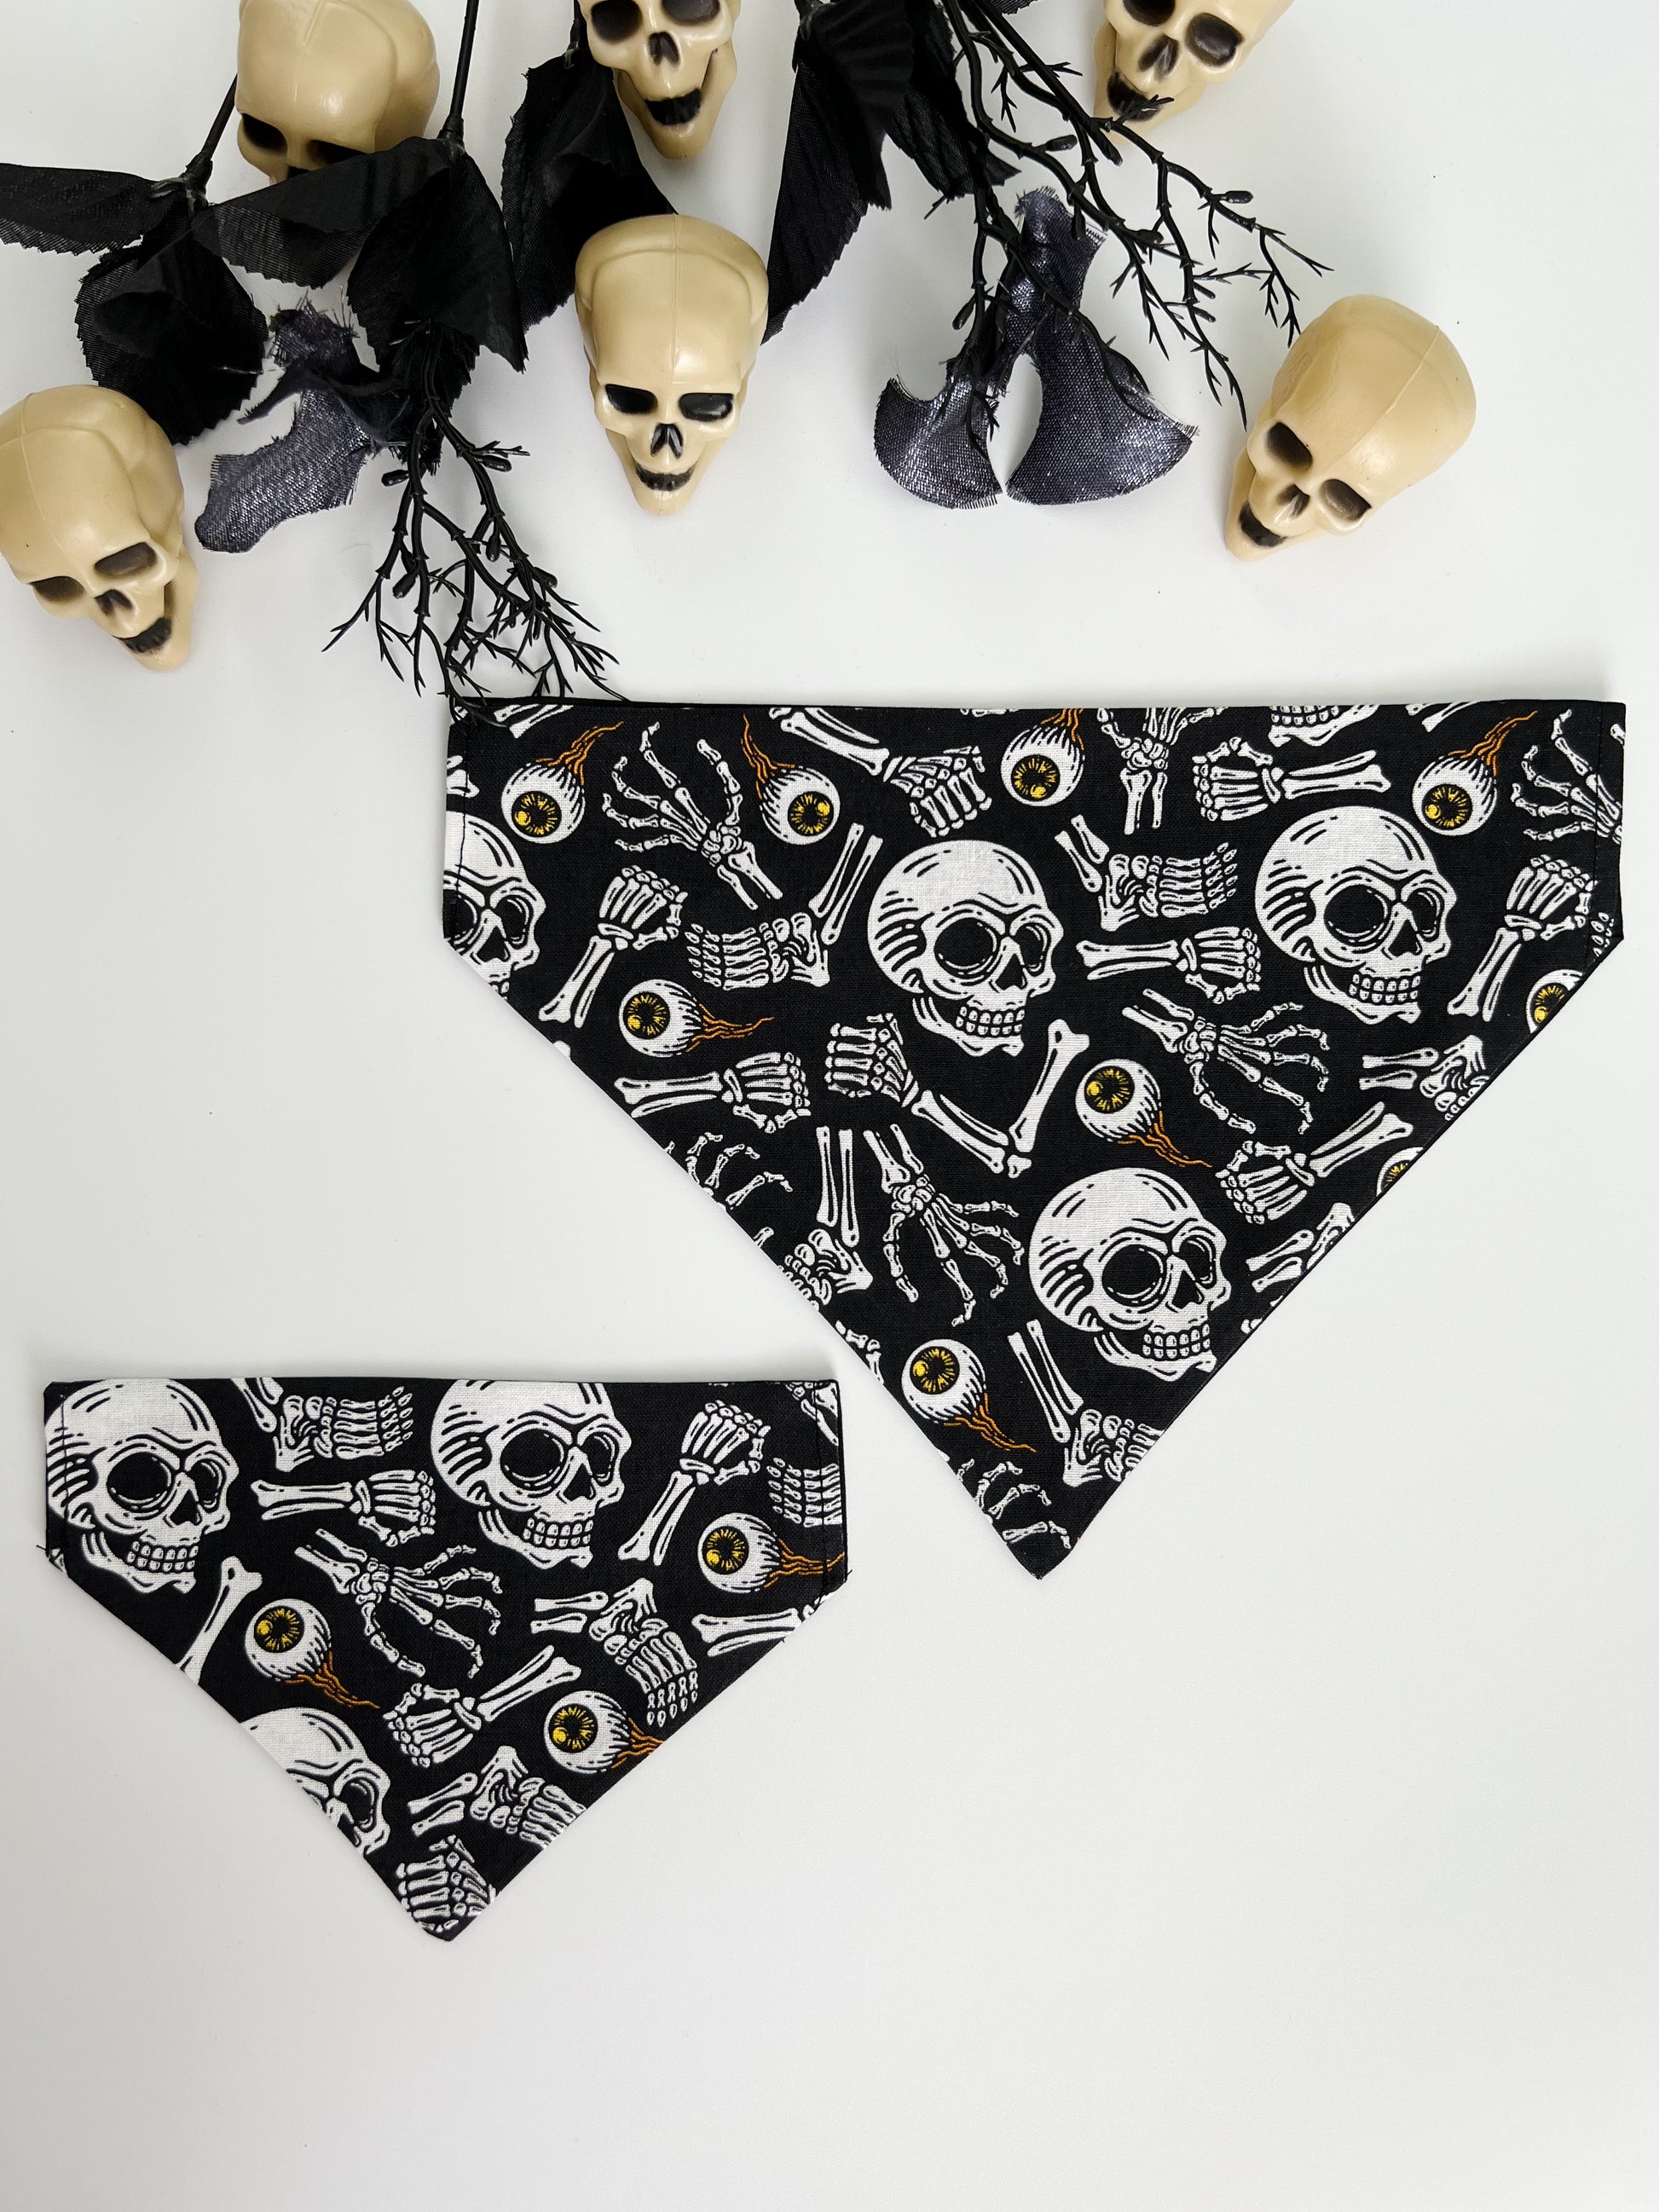 Houndstooth Underwear -Men's Brief – Skull and Bones